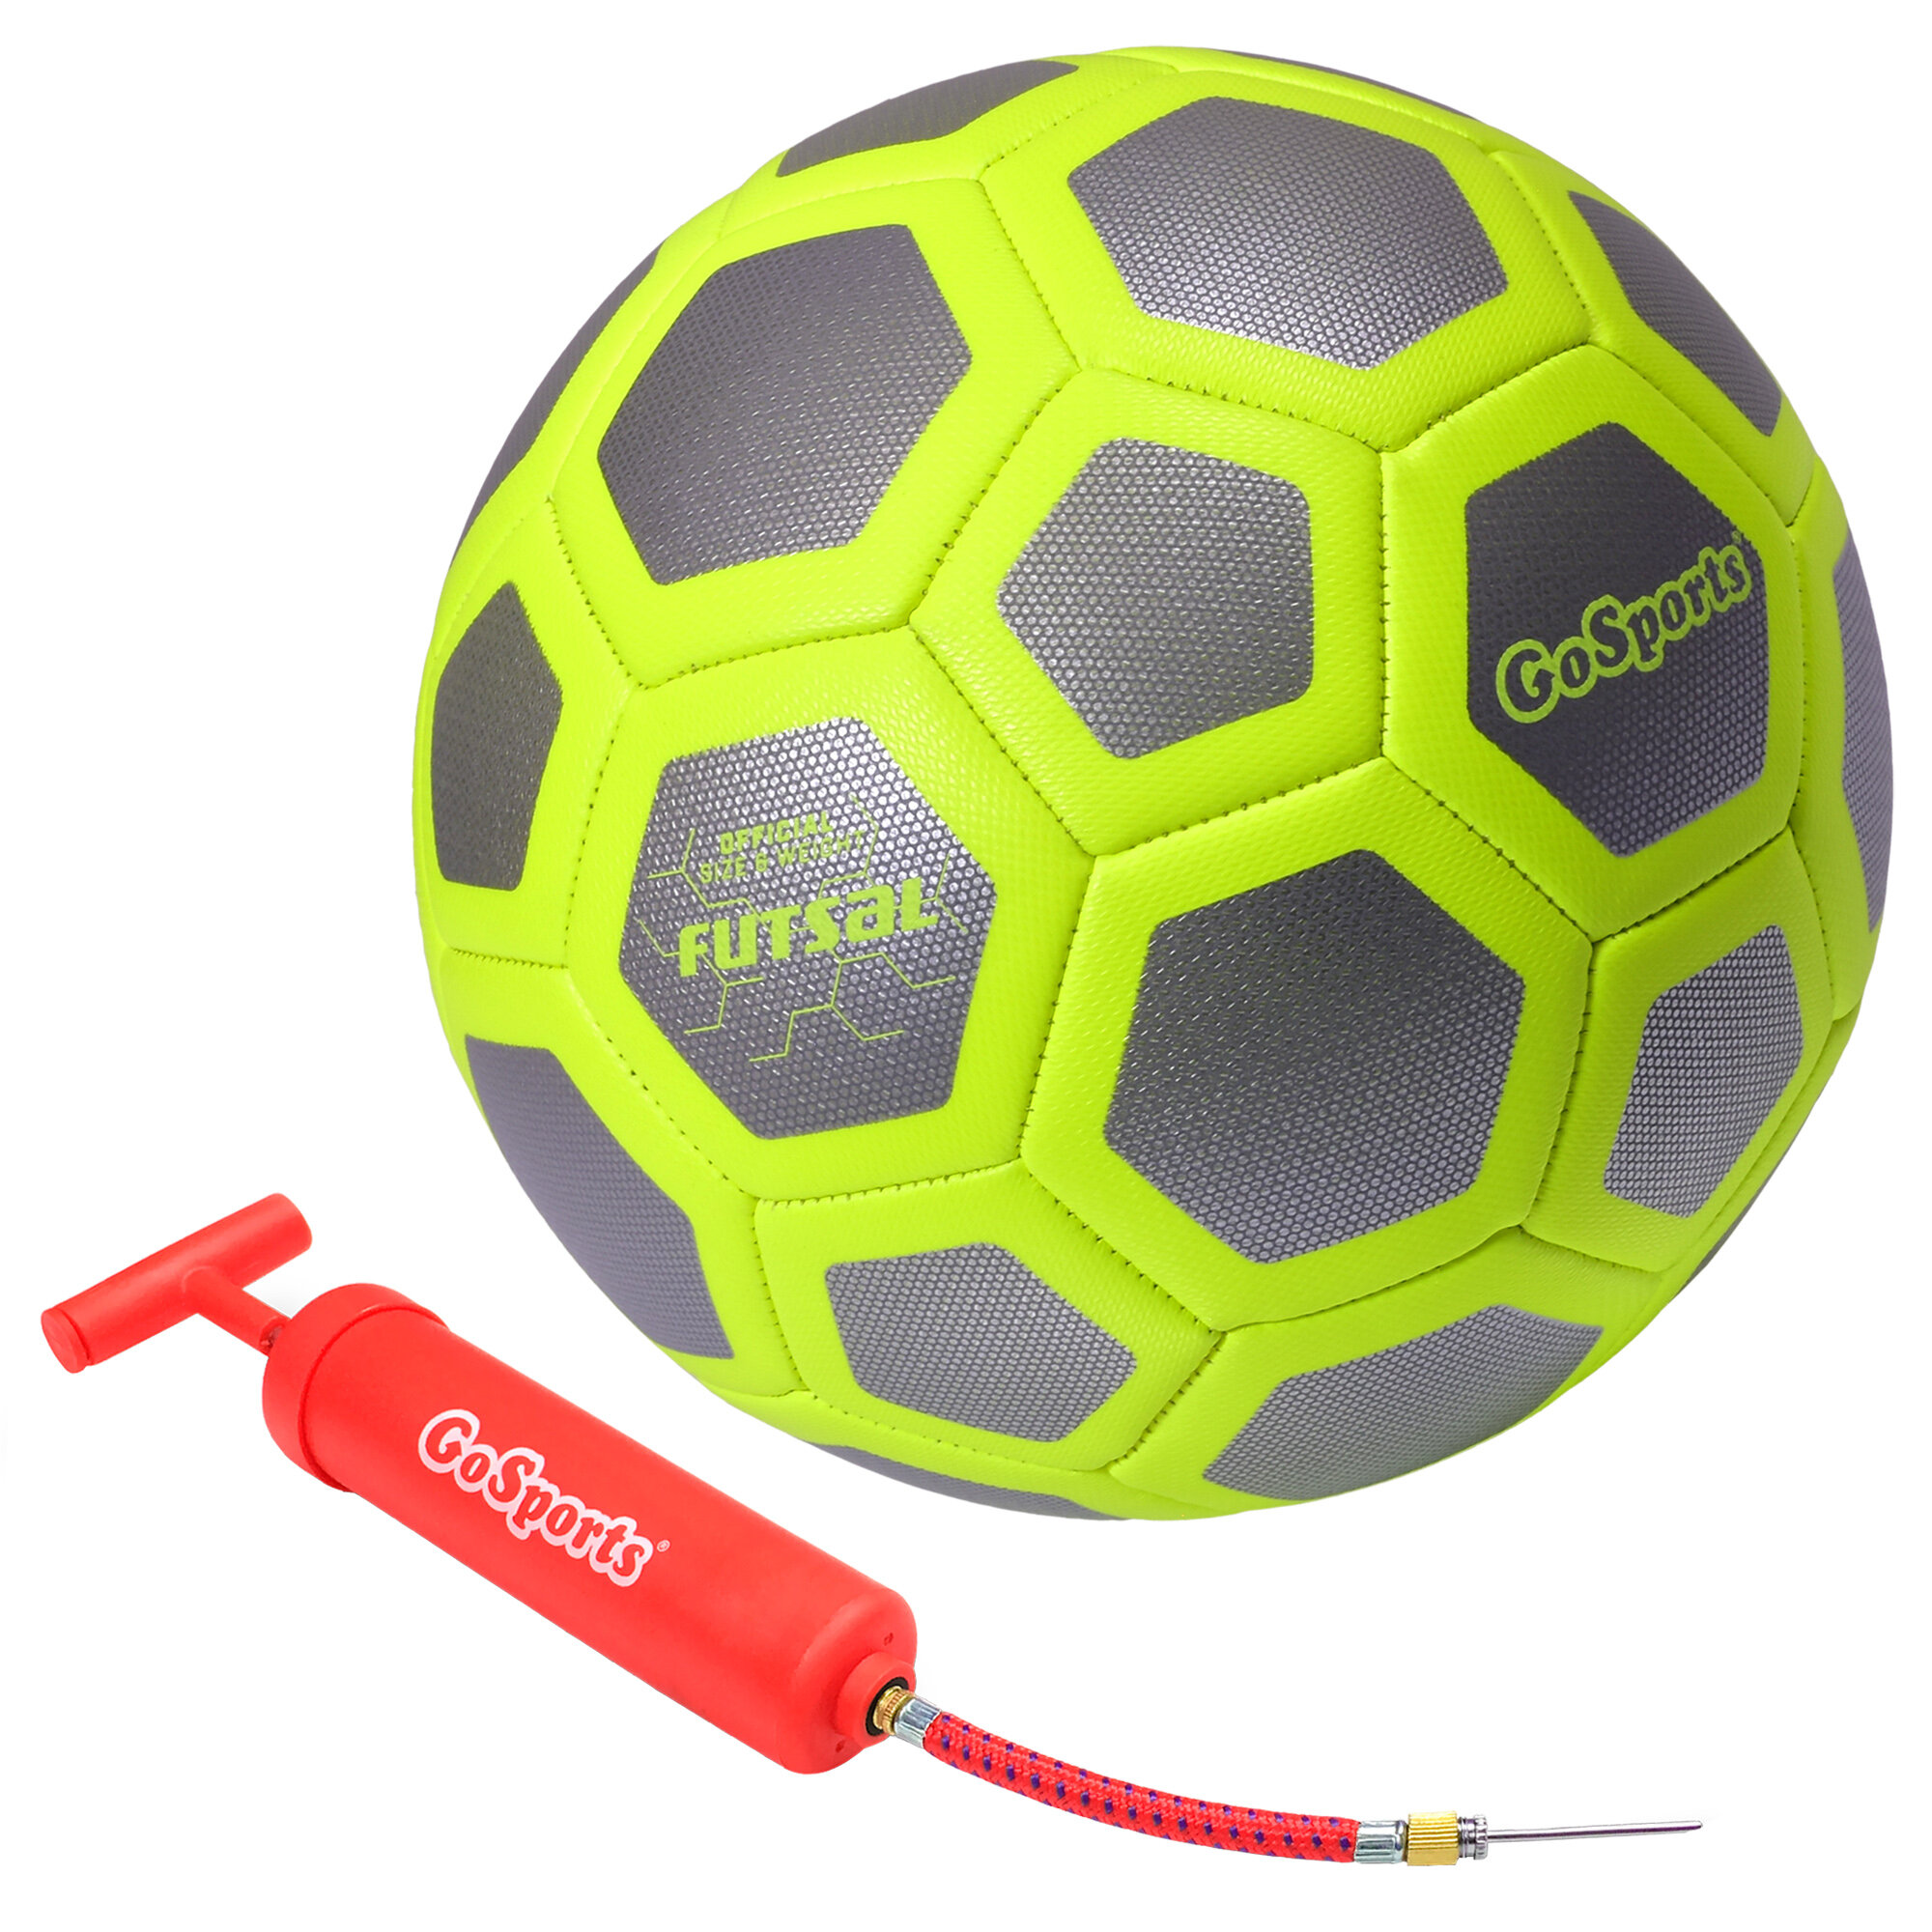 Gosports Elite Futsal Ball - Great For Indoor Or Outdoor Futsal